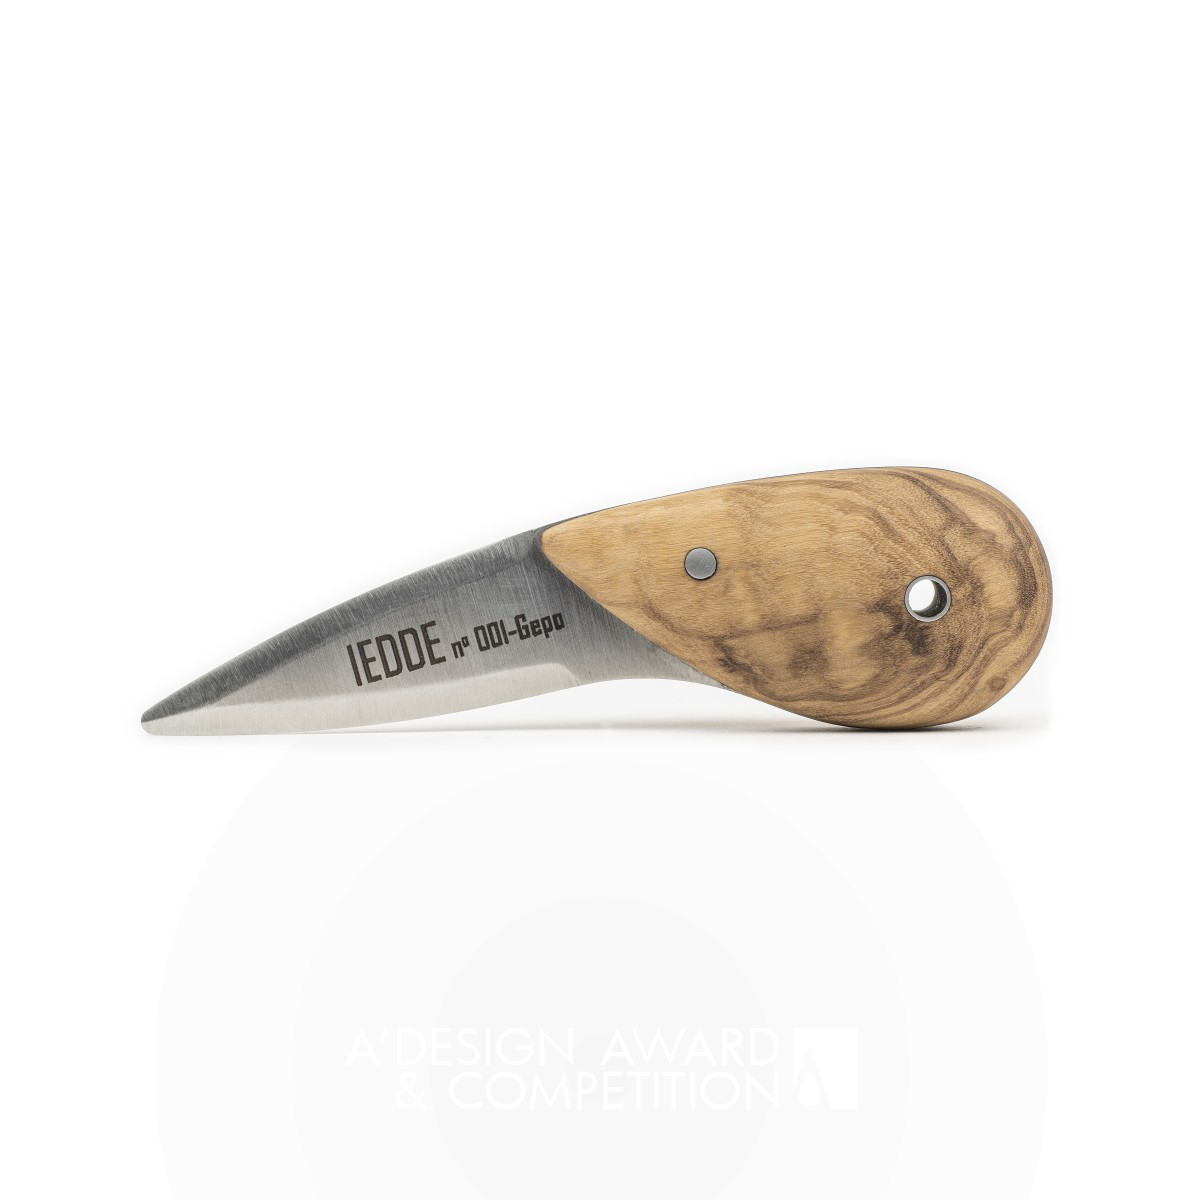 Iedde Mussel Knife by Giuliano Ricciardi